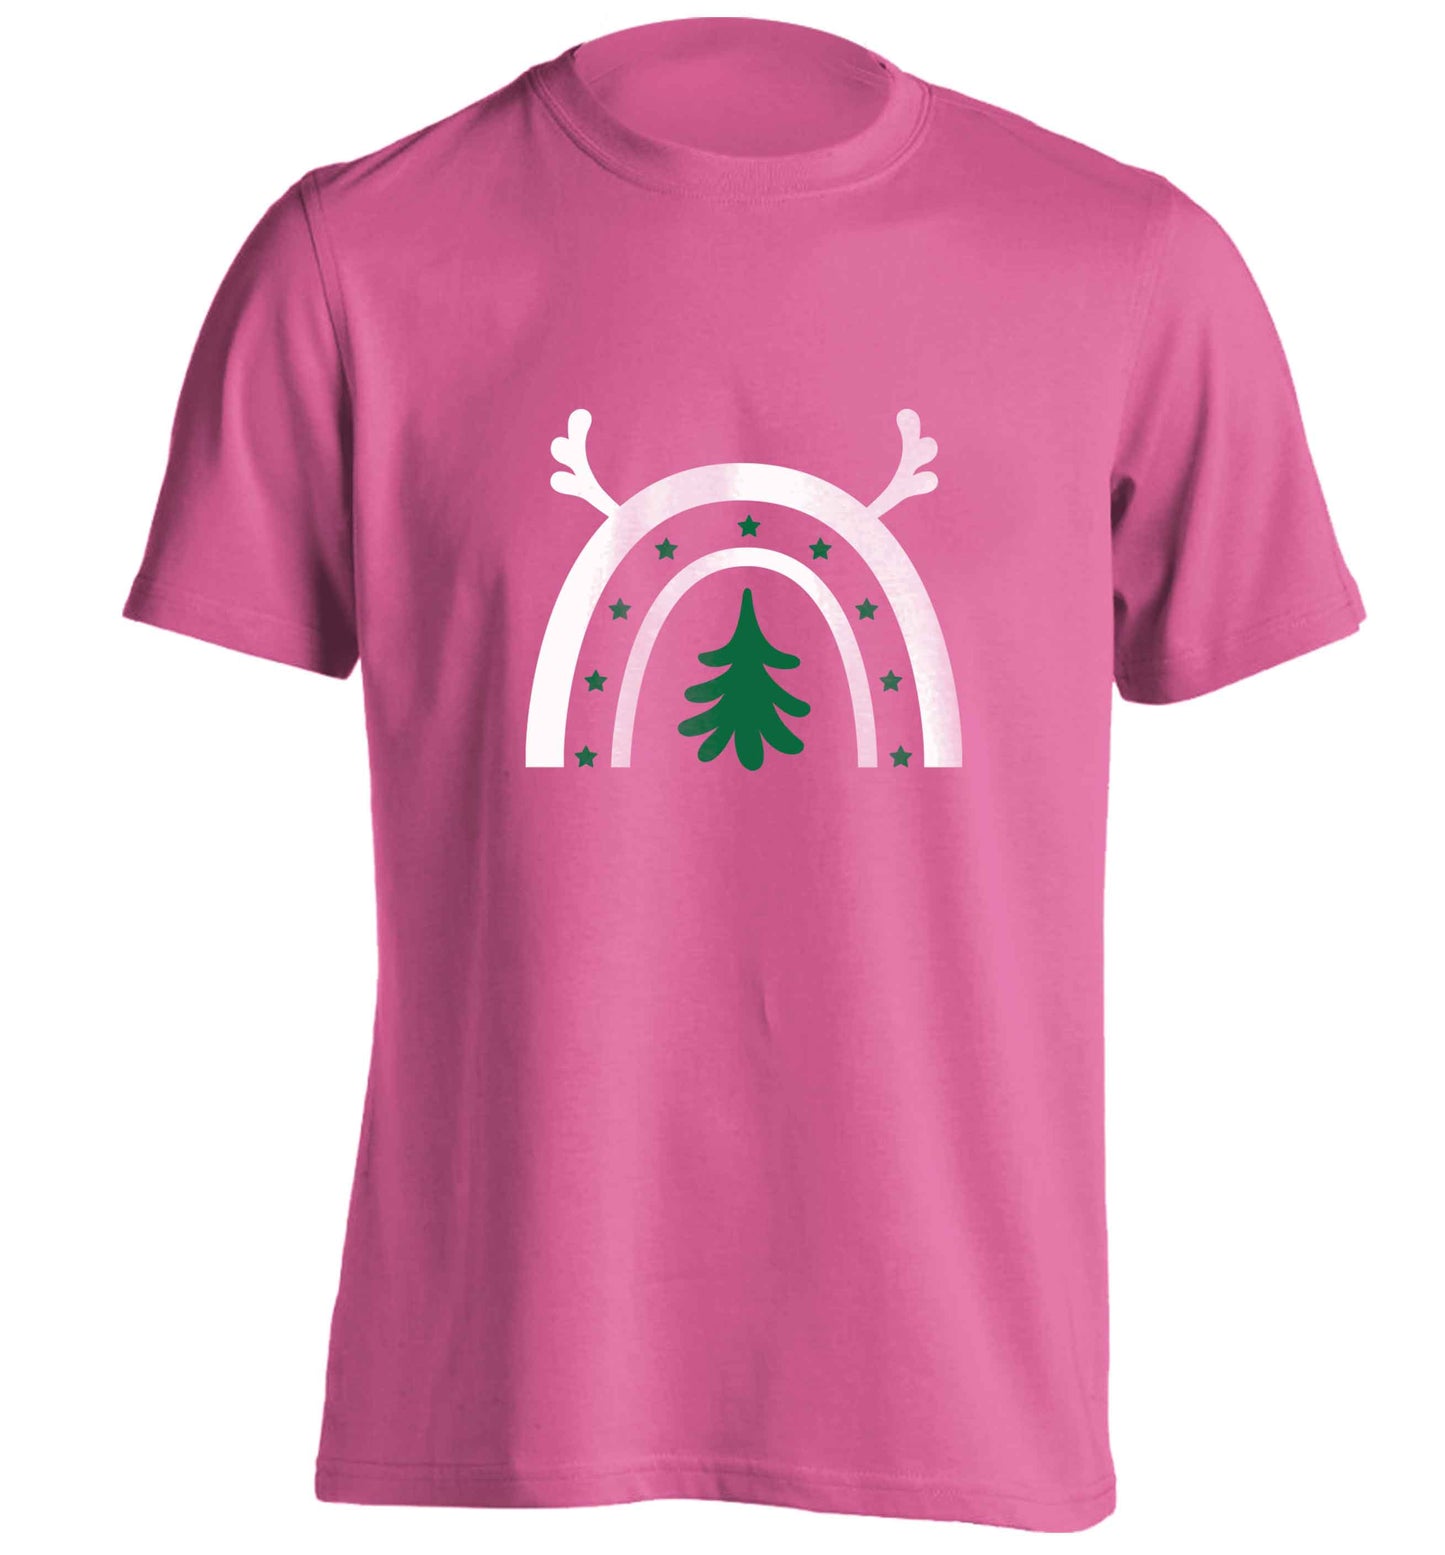 Christmas rainbow adults unisex pink Tshirt 2XL